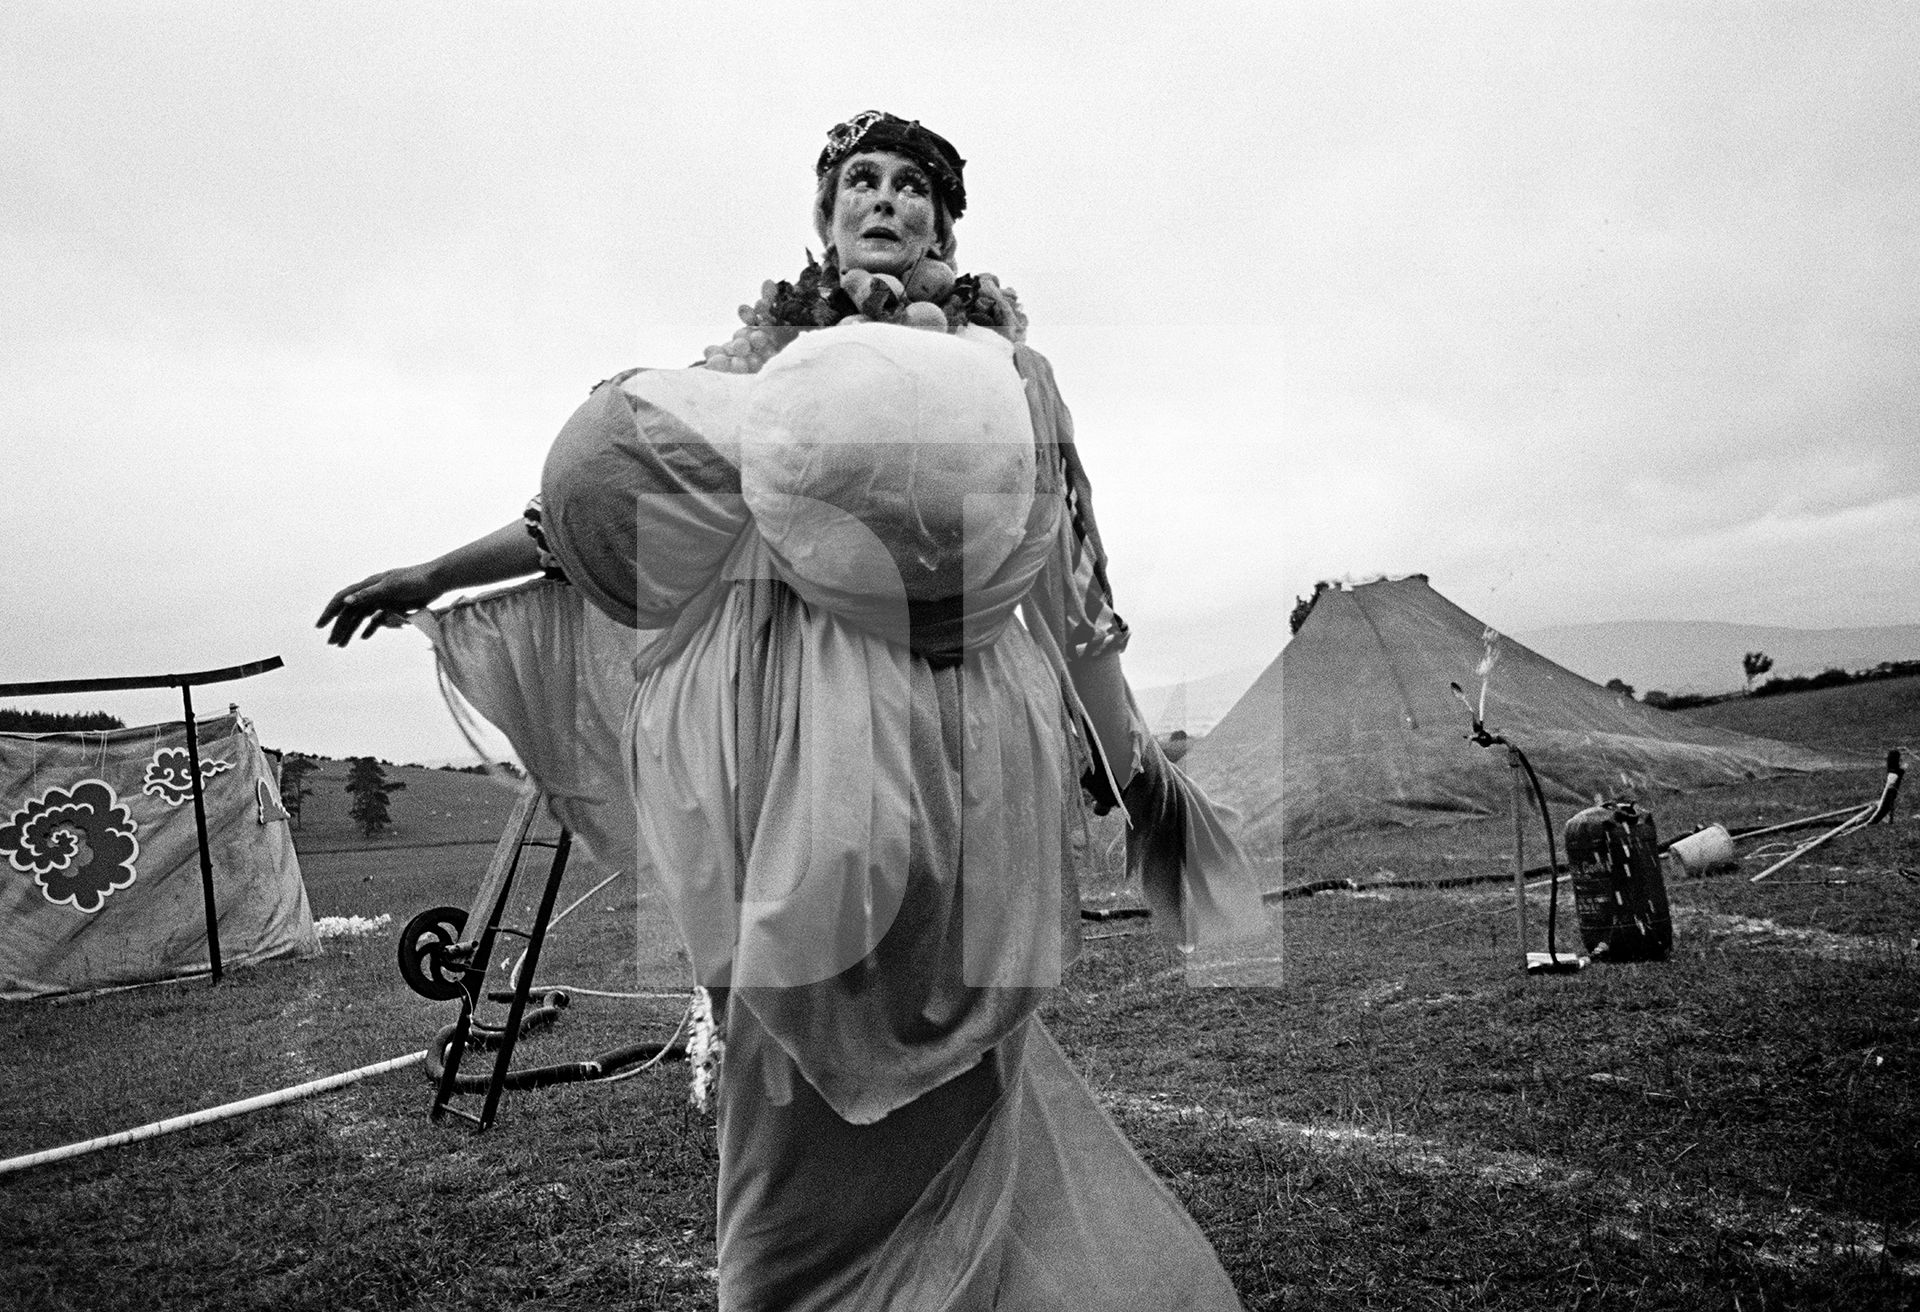 Performer Maggy Howarth as Sally Ocean in “Uppendown Mooney” written by Adrian Mitchell. Hilltop Farm, Wennington, Lancashire. July 1978 by Daniel Meadows